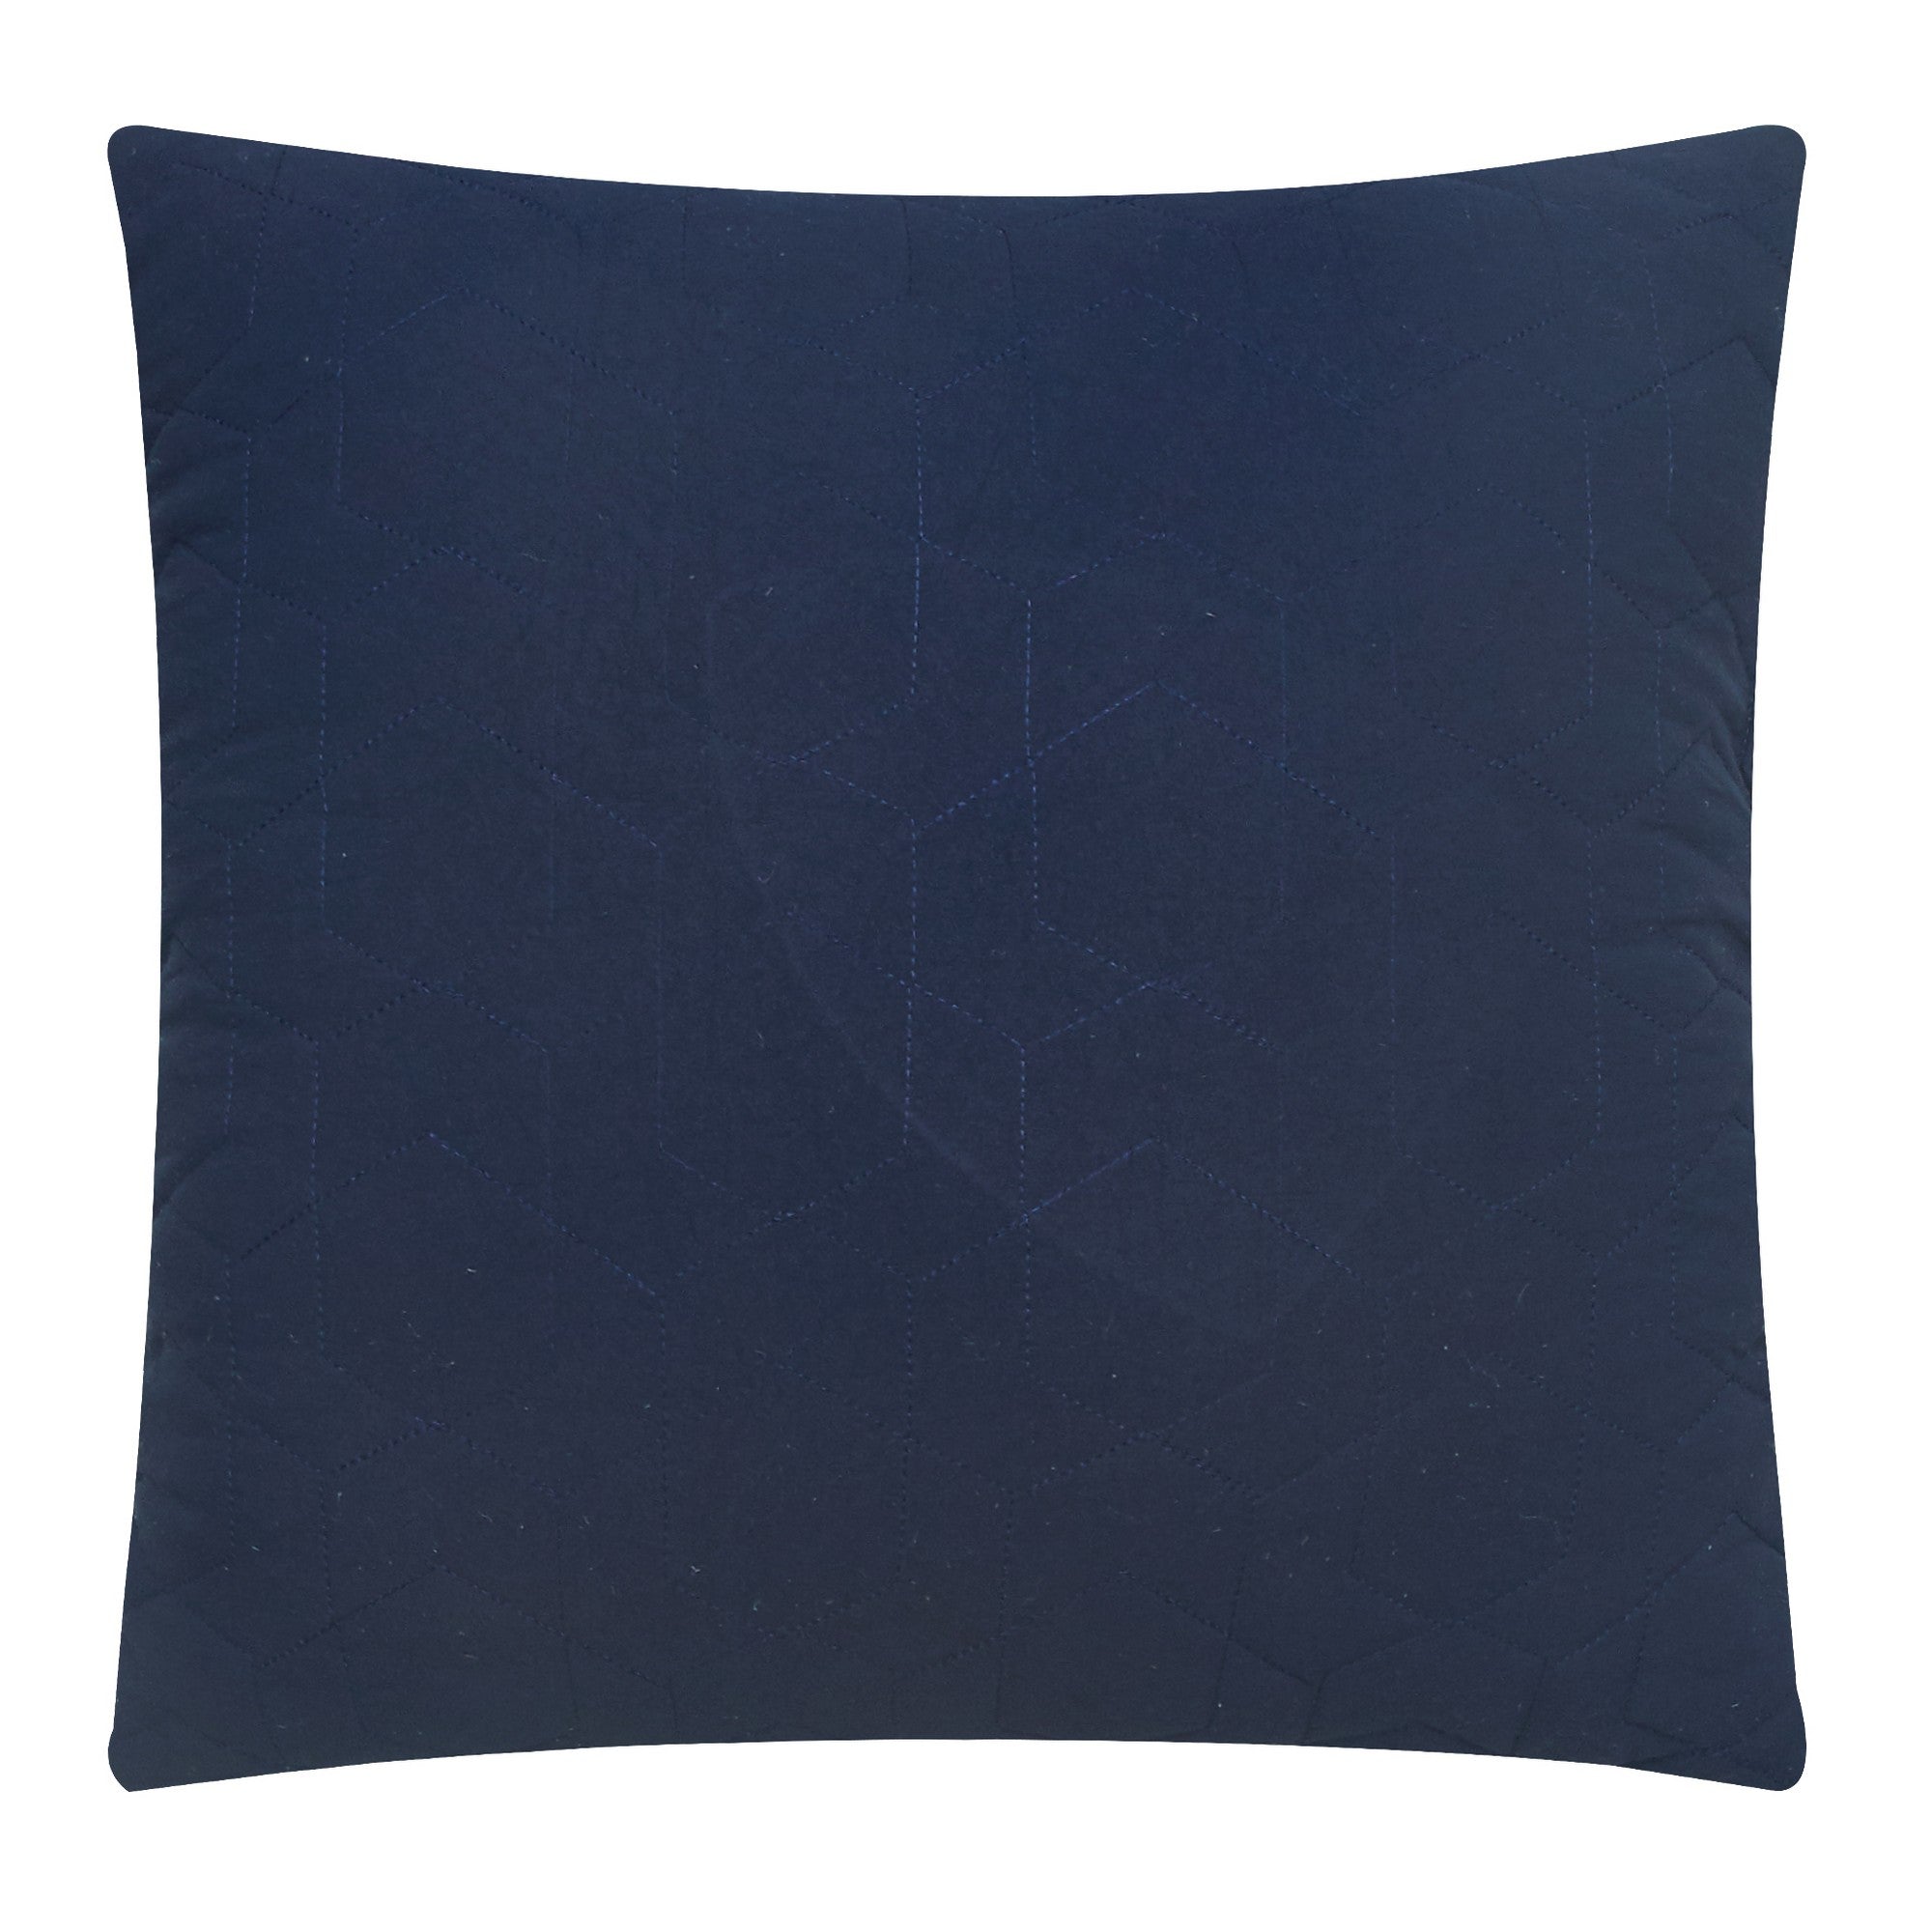 NY&C Home Davina 5 Piece Comforter Set Geometric Hexagonal Pattern Design Bedding - Decorative Pillows Shams Included, King, Navy - King